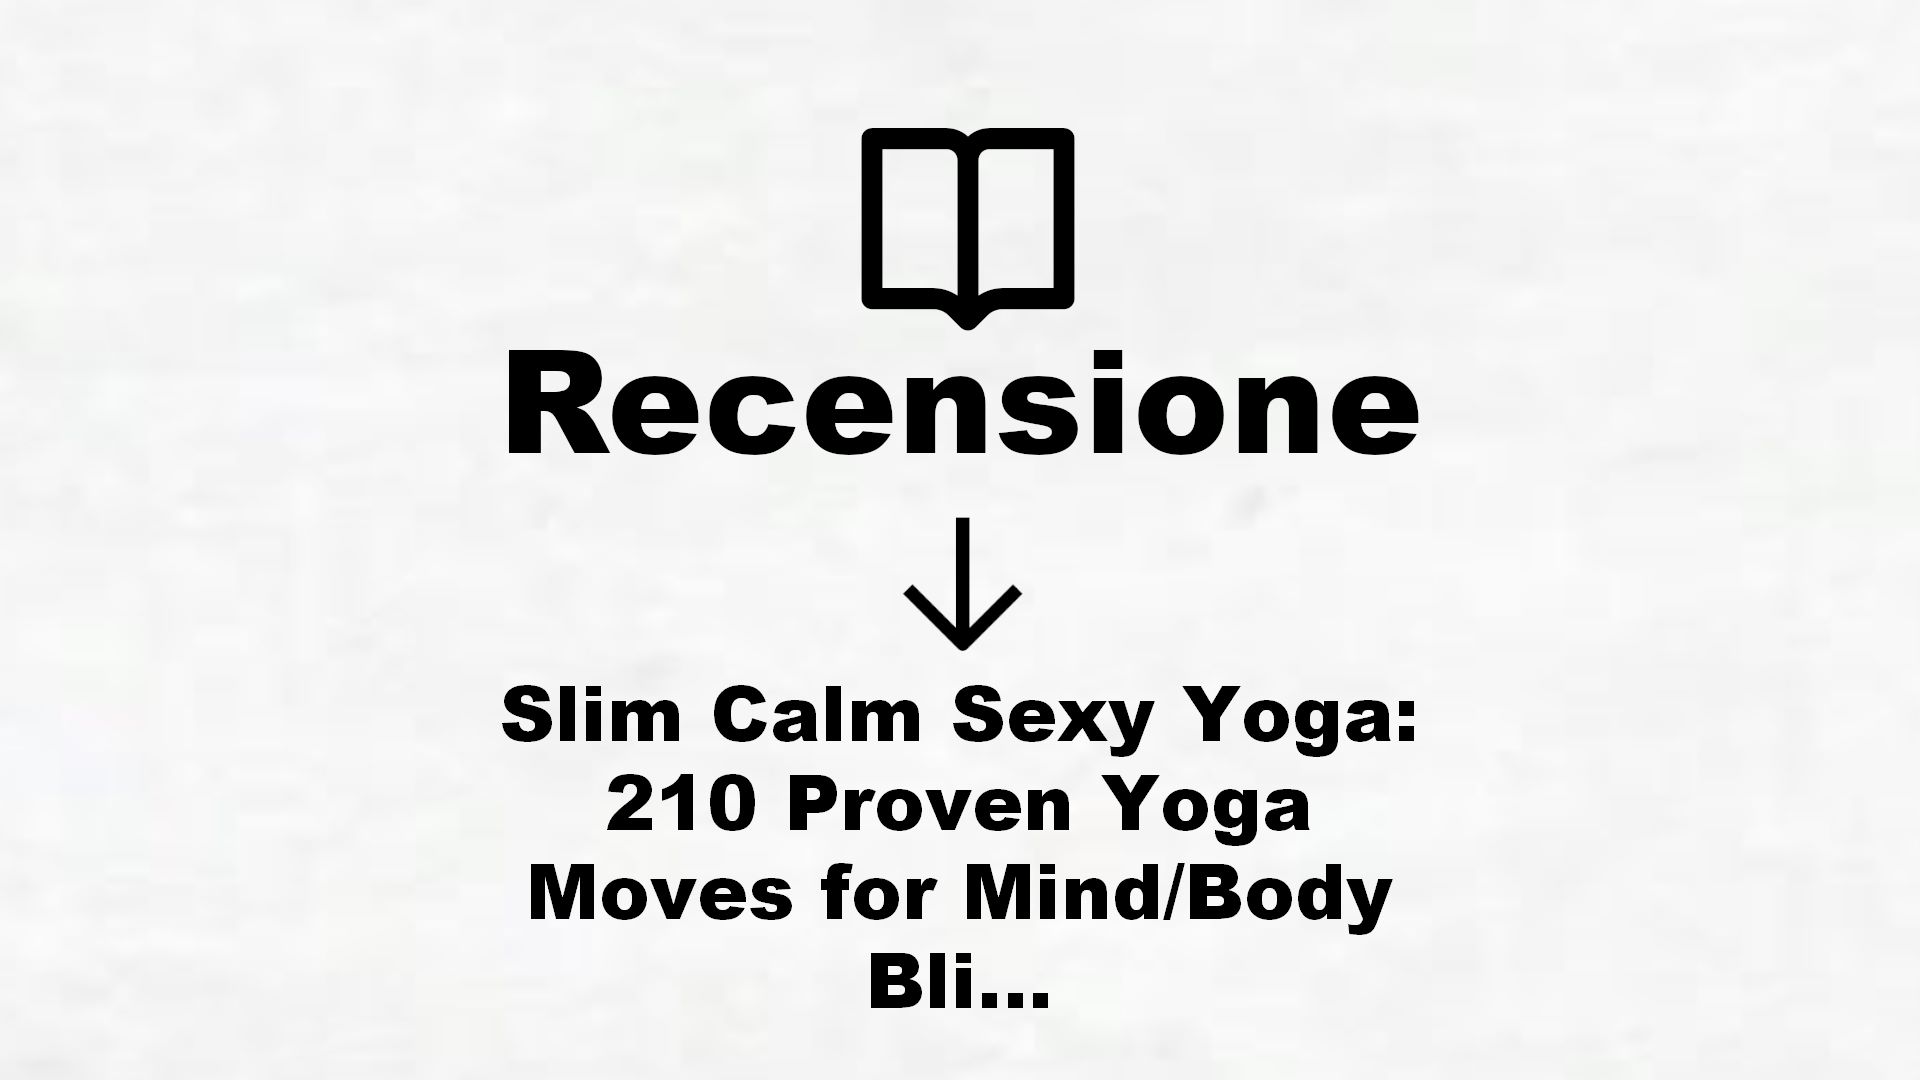 Slim Calm Sexy Yoga: 210 Proven Yoga Moves for Mind/Body Bliss (English Edition) – Recensione Libro